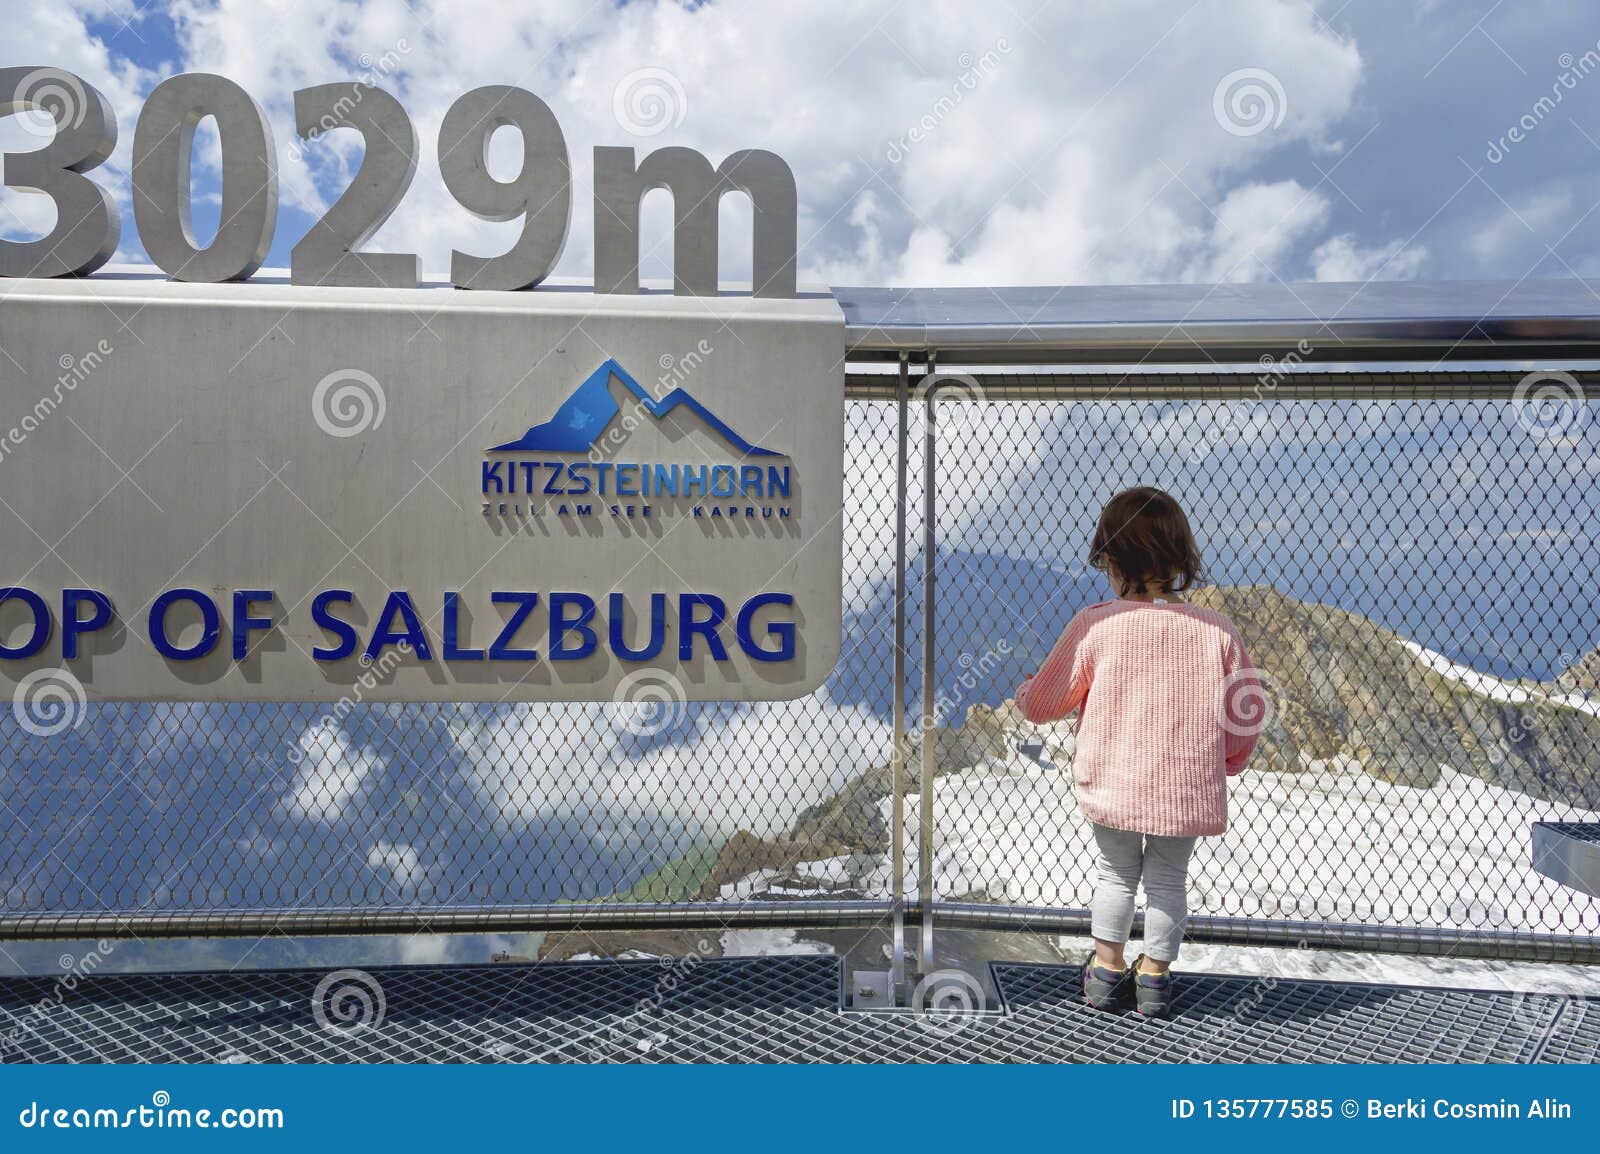 KITZSTEINHORN, AUSTRIA 3029 M Top of Salzburg. Editorial Image - Image of salzburgviewing, sport: 135777585